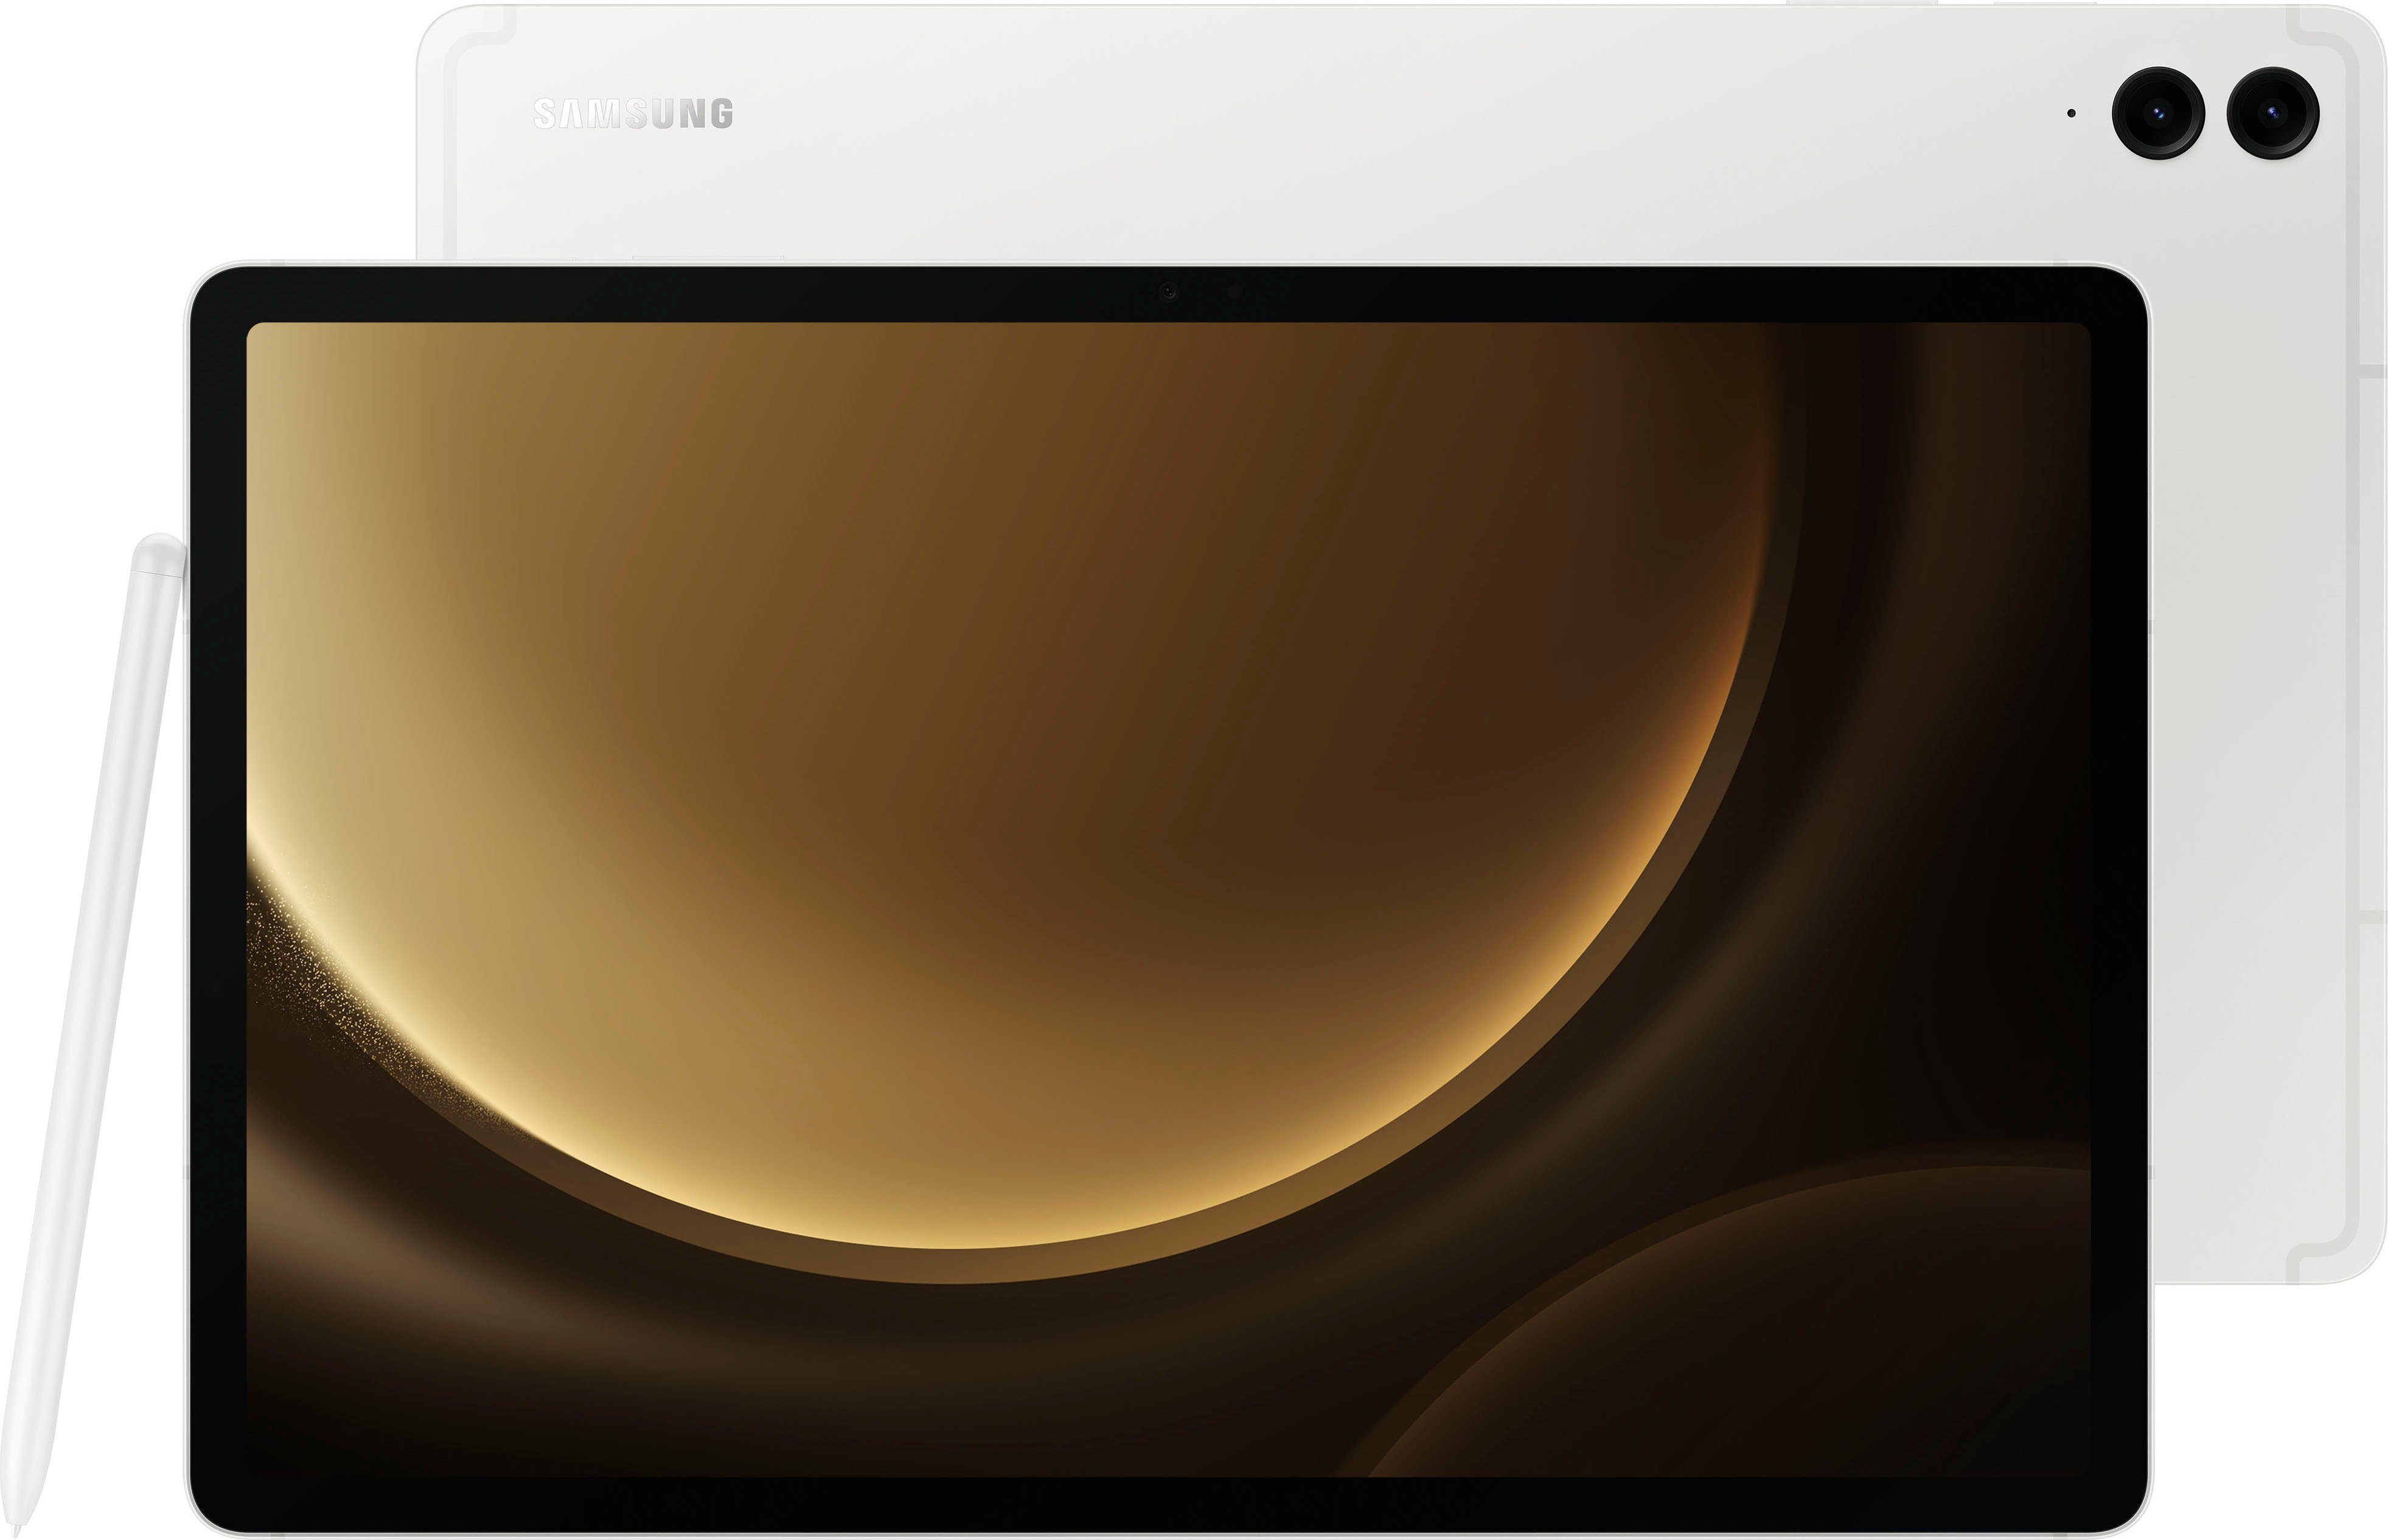 S9 Android,One GB, Tab Samsung Tablet FE+ 128 silver (12,4", UI,Knox) Galaxy